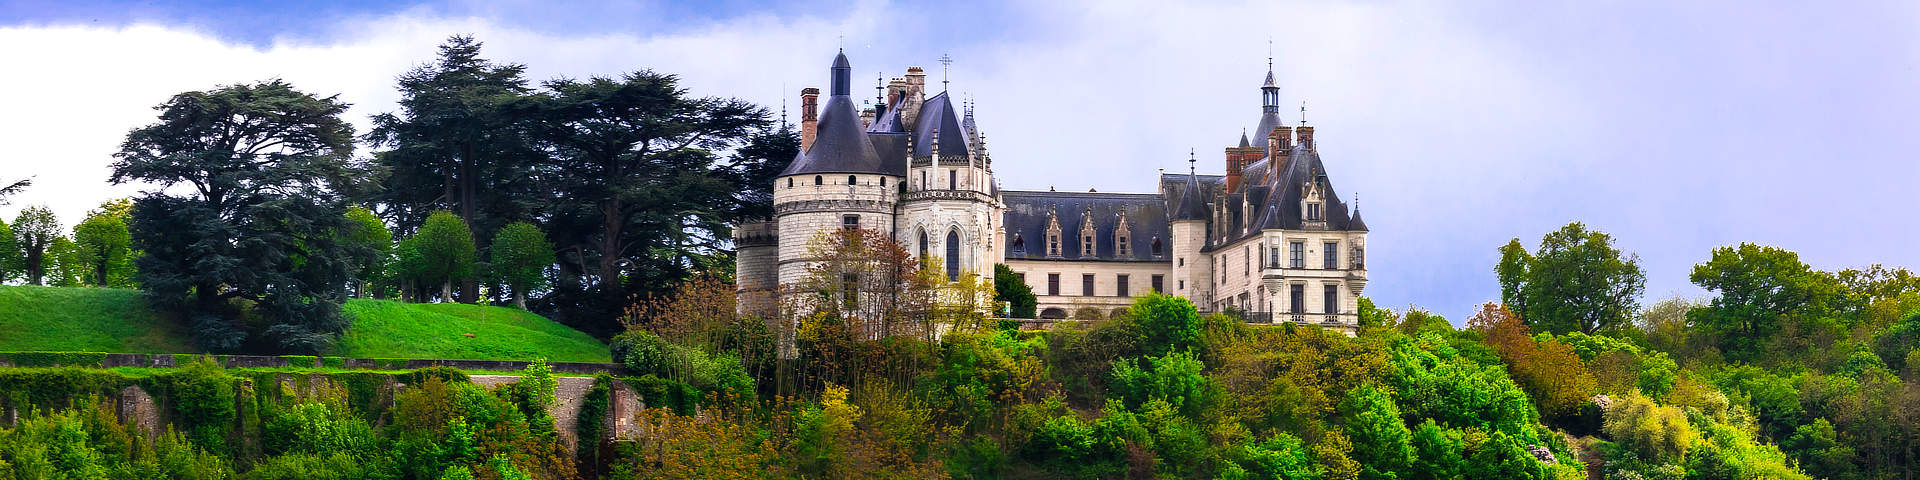 Loiredal Frankrijk